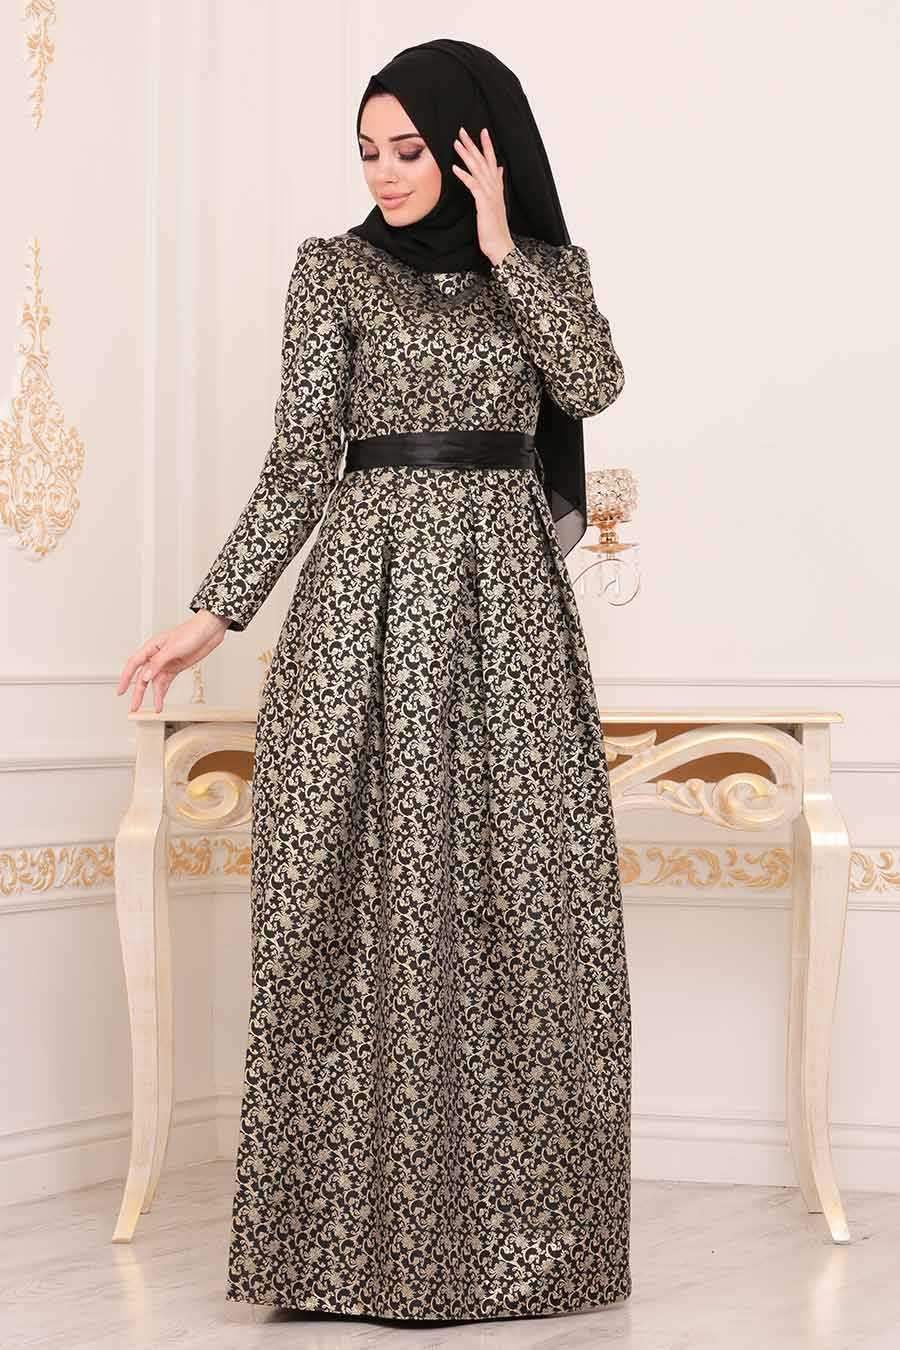 Neva Style - Long Black Islamic Dress 82446S